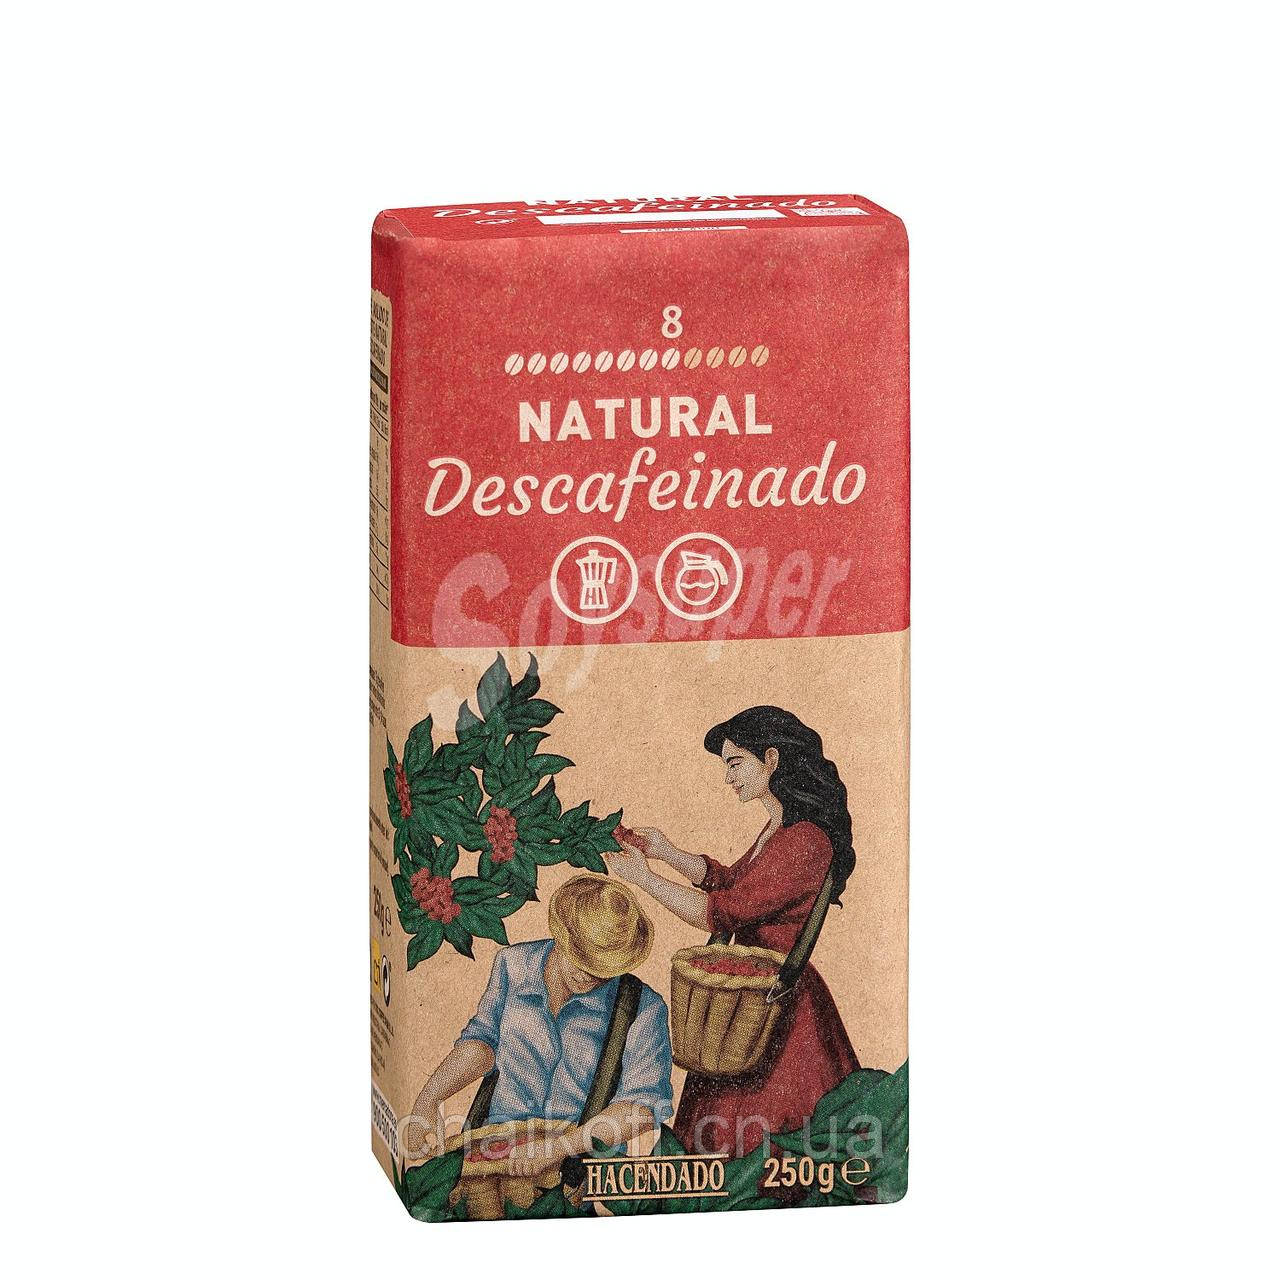 Кава мелена без кофеїну Hacendado descafeinado natural 250 г (Іспанія)